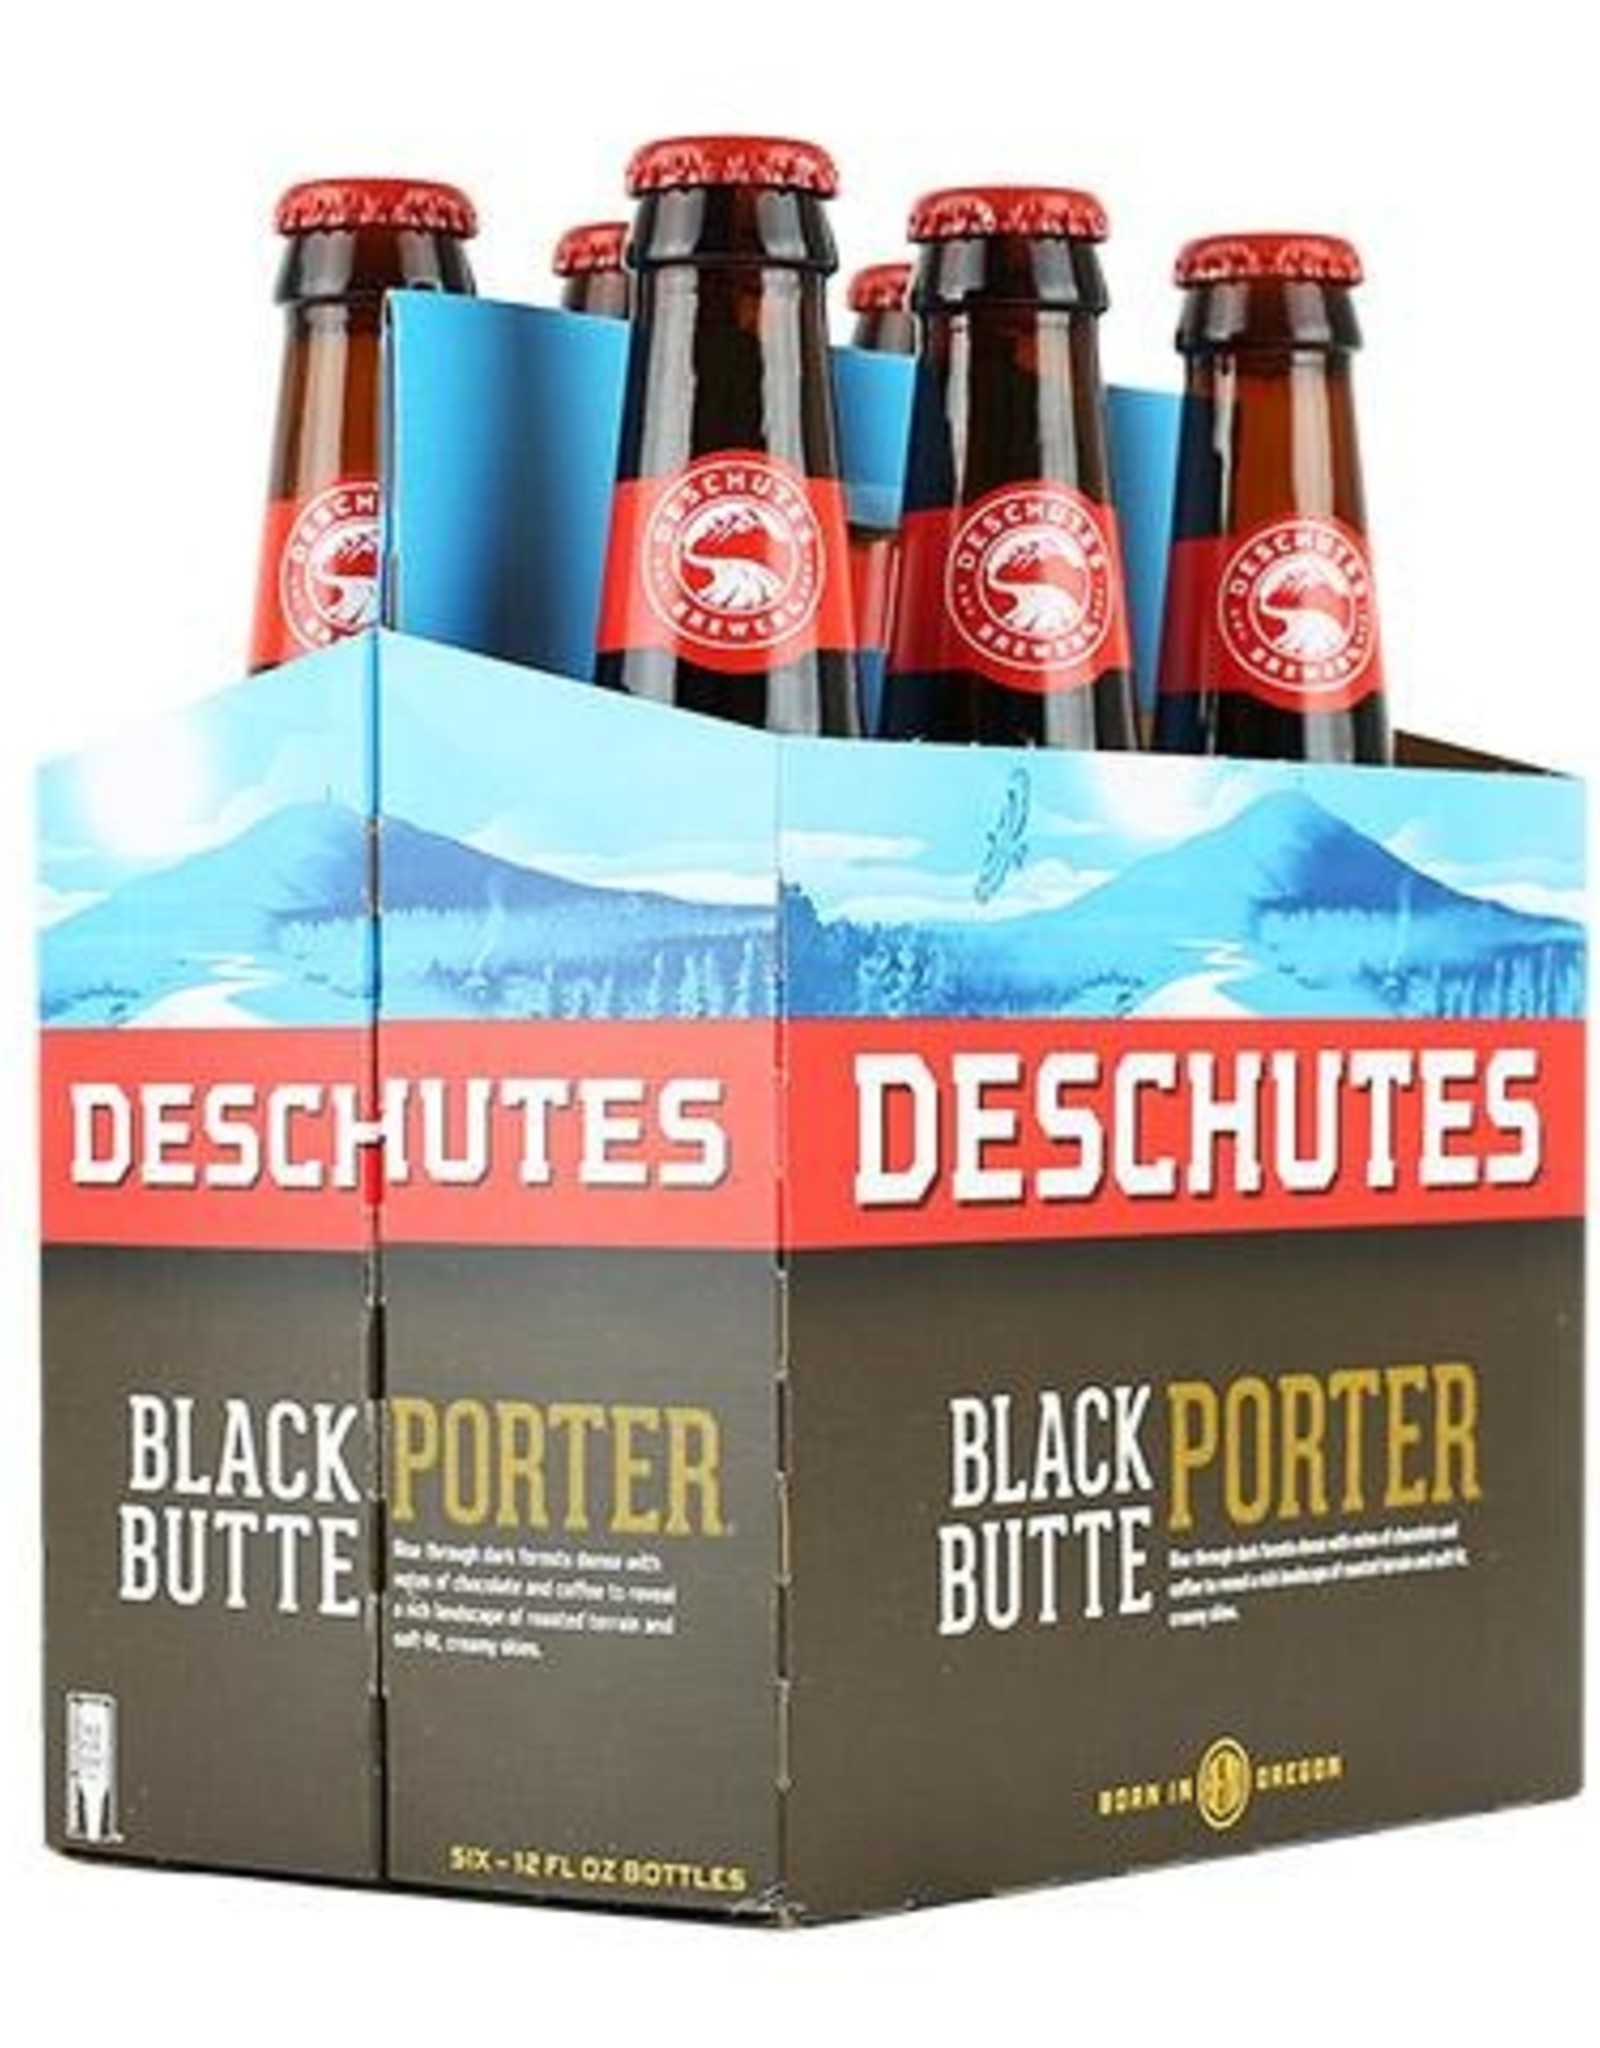 Deschutes Black Butte Porter XXX 4x12 oz bottles